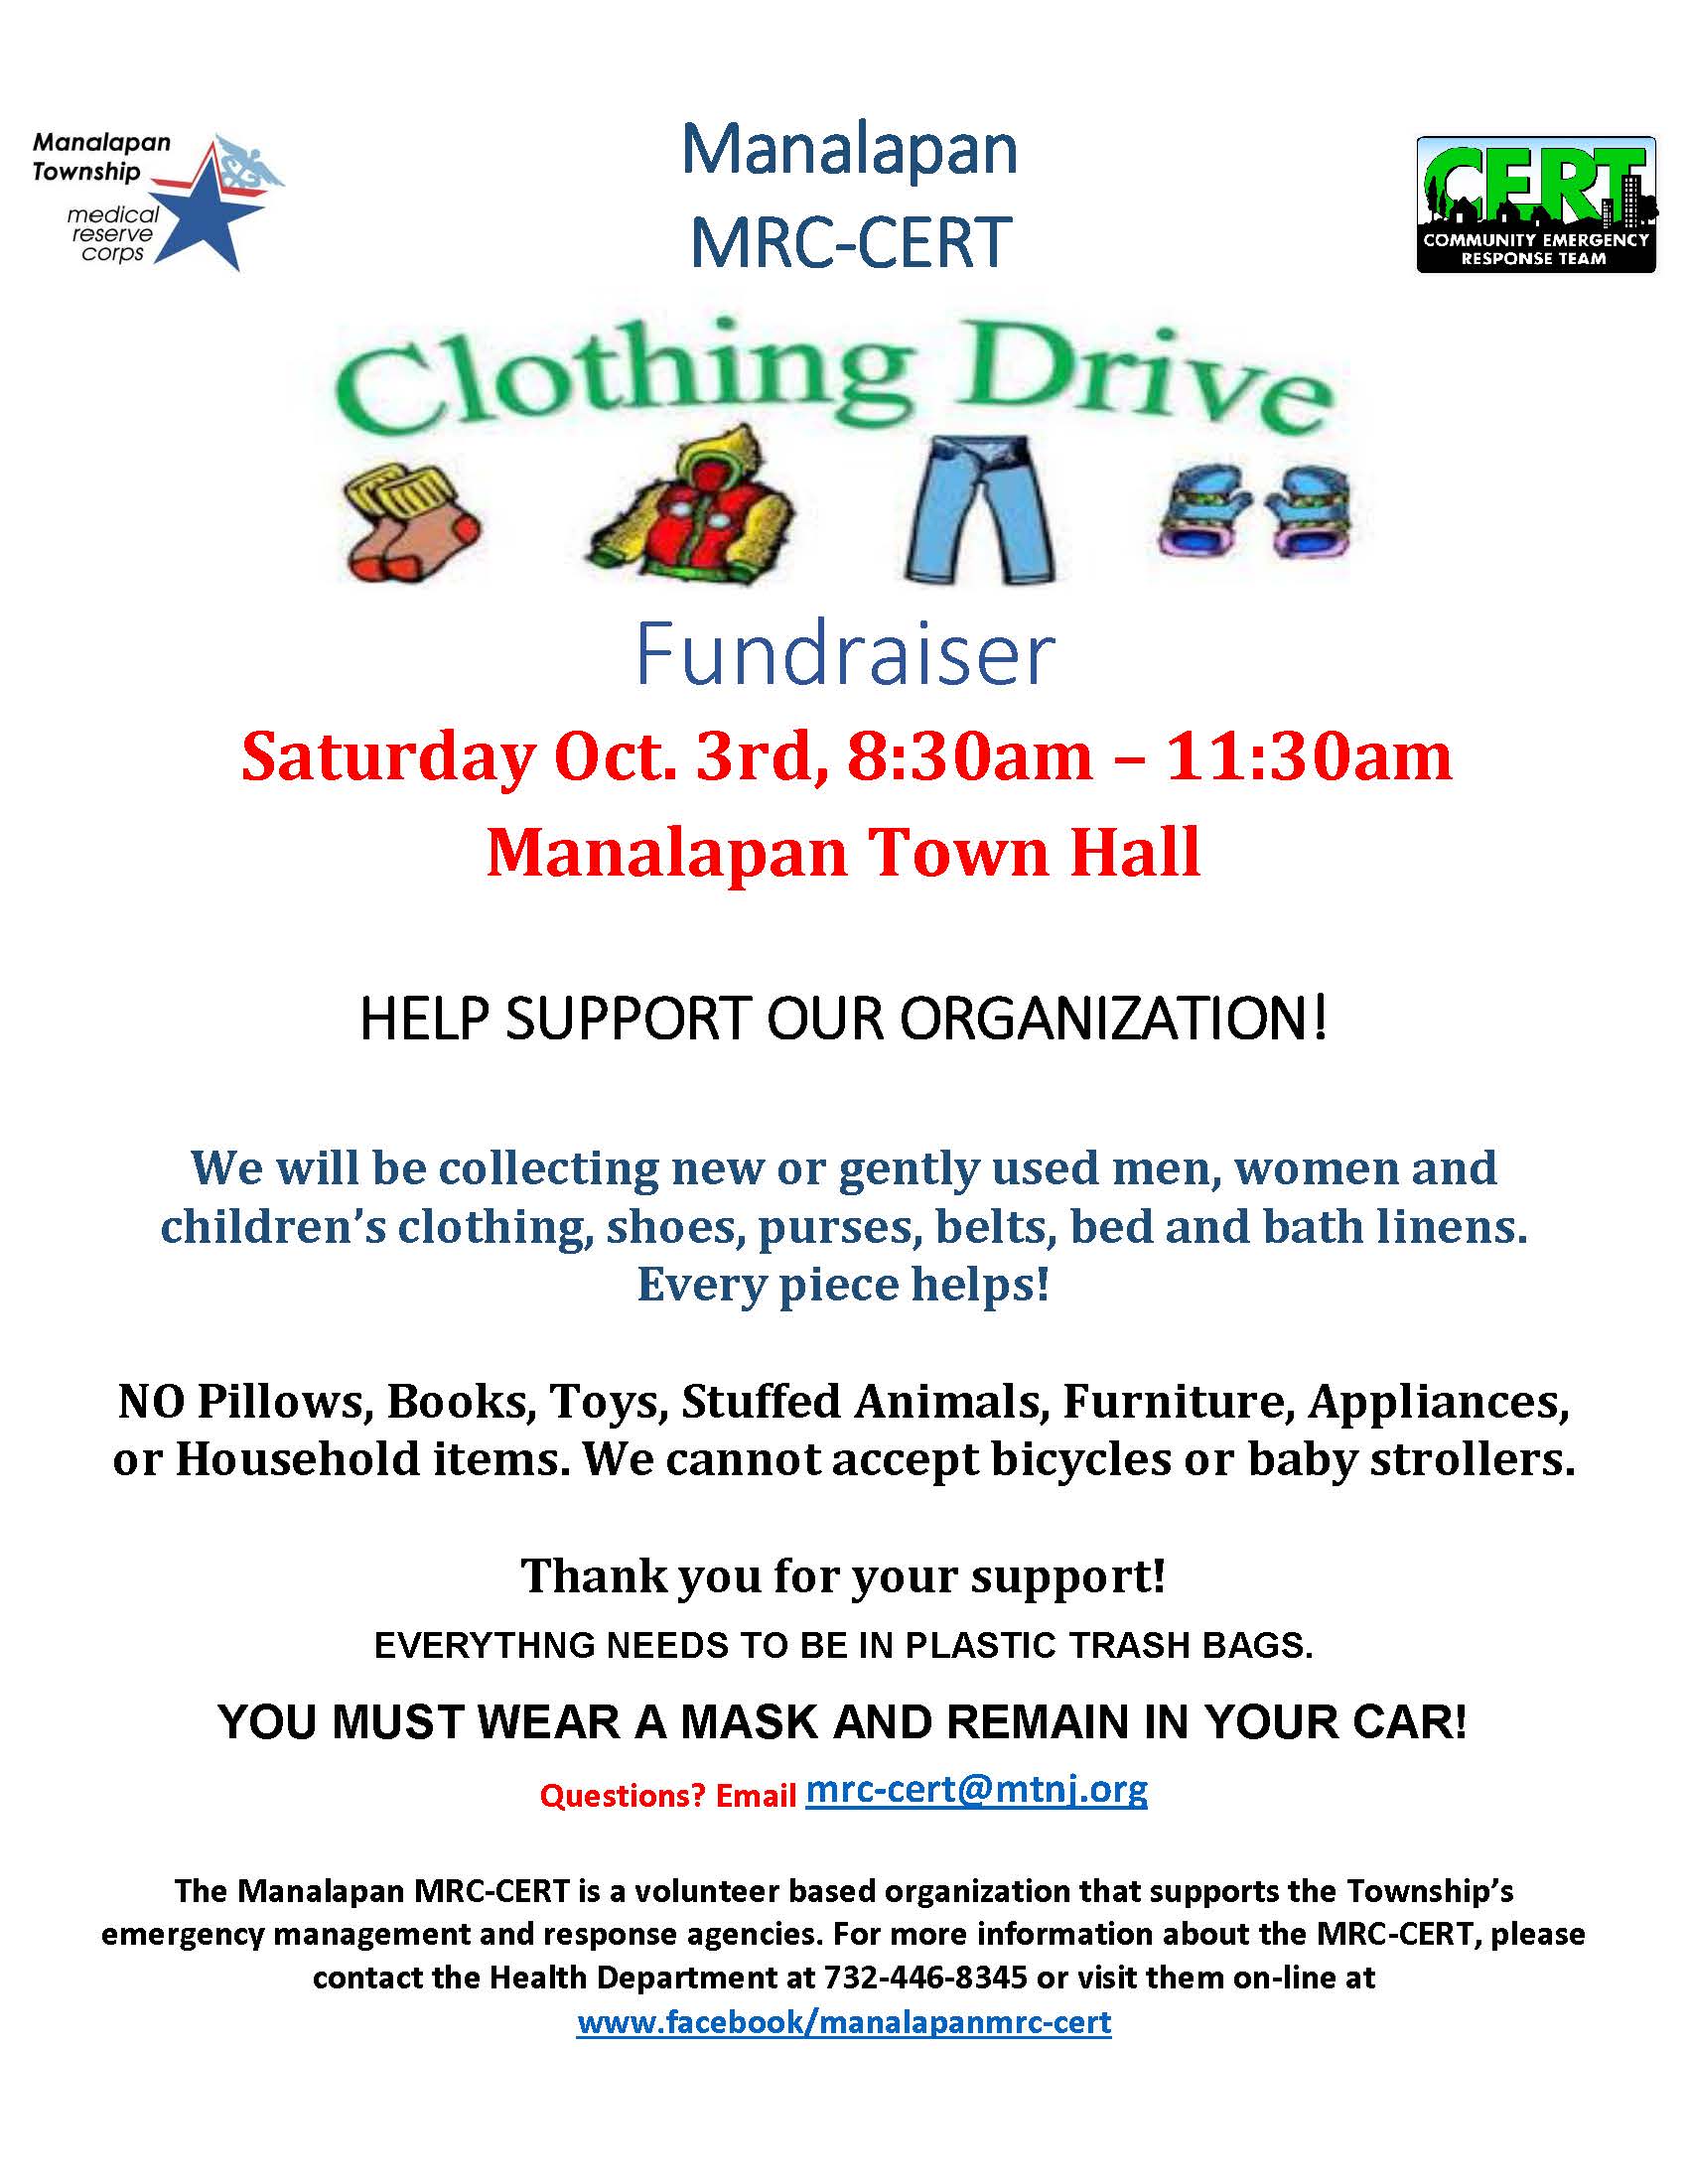 MRC Cert Fall Clothing Drive | Manalapan Township